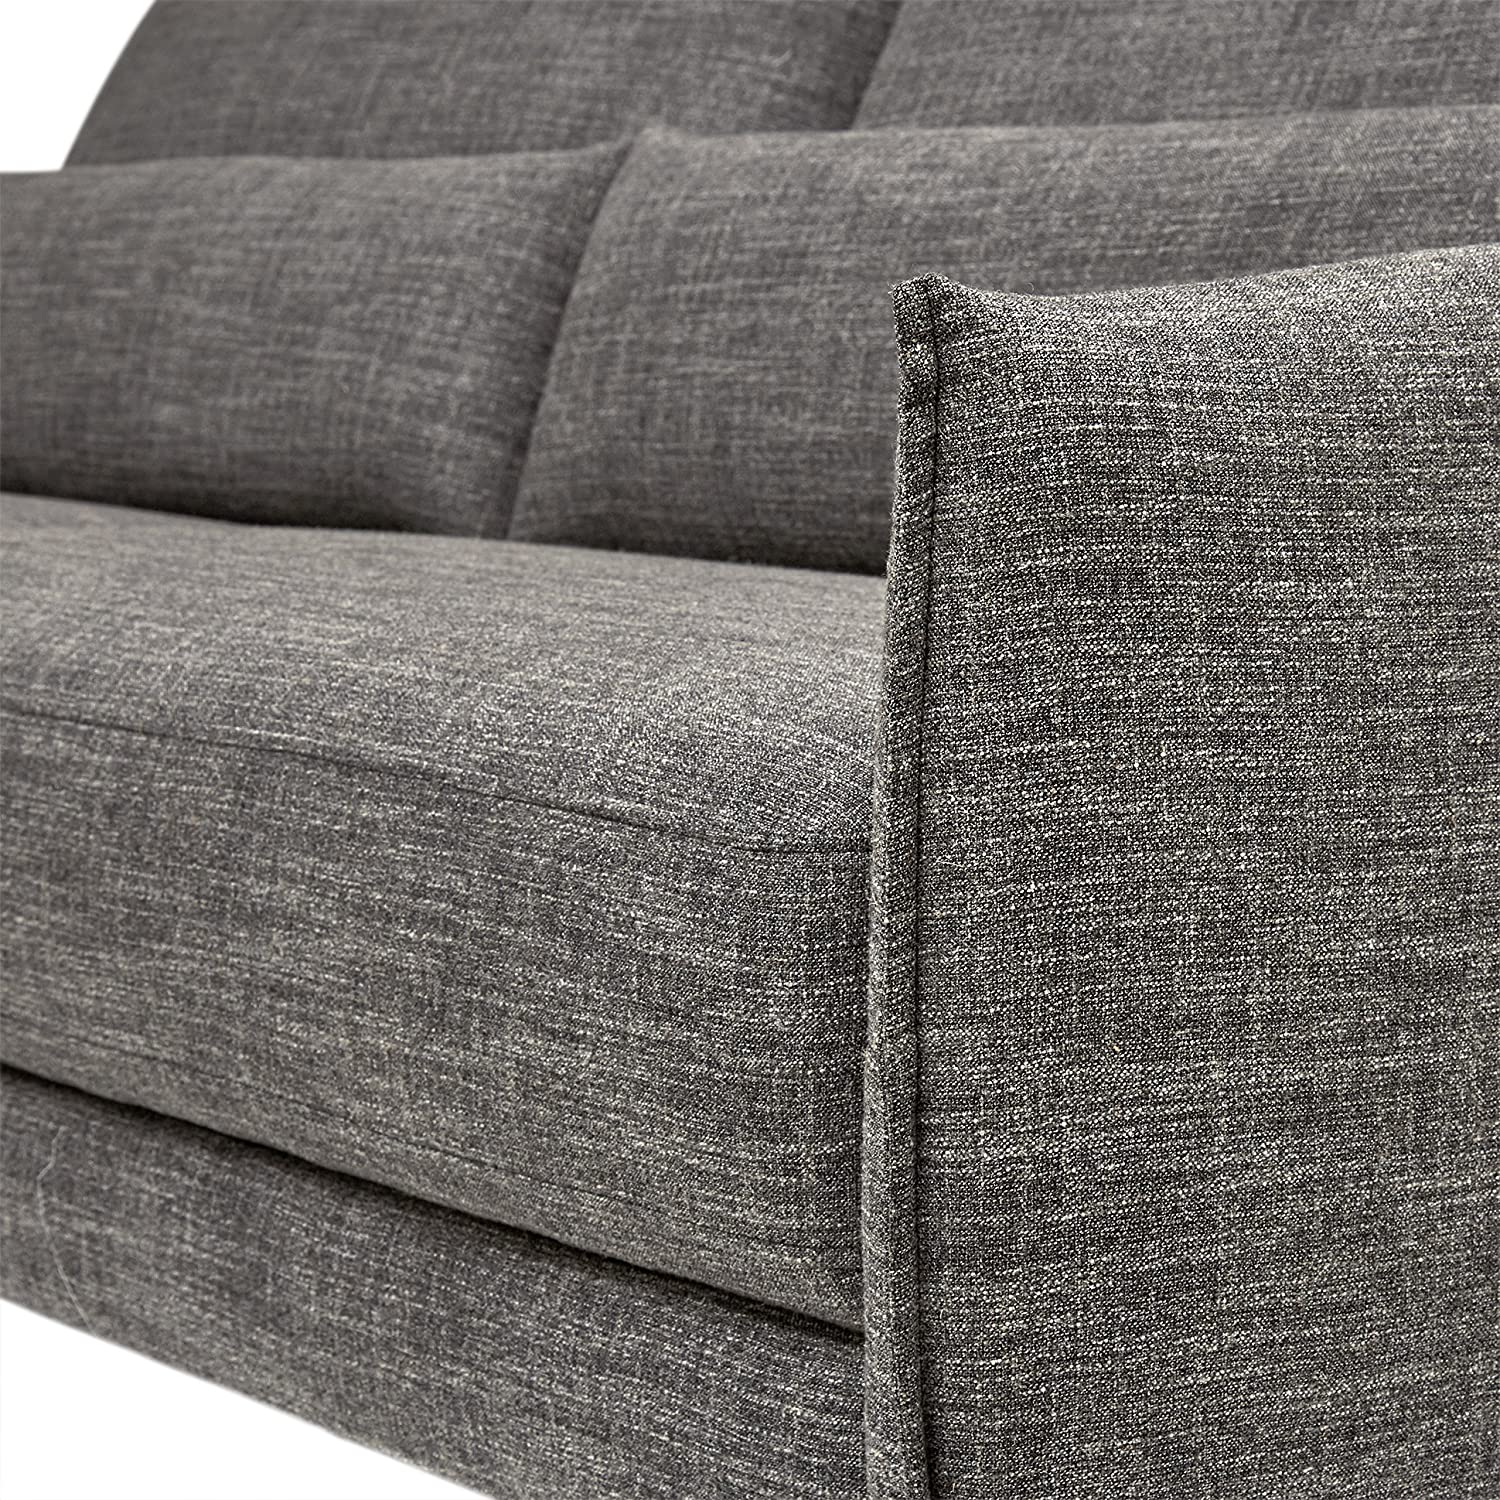 2 Seater Sofa : Dark Grey Sofa Set